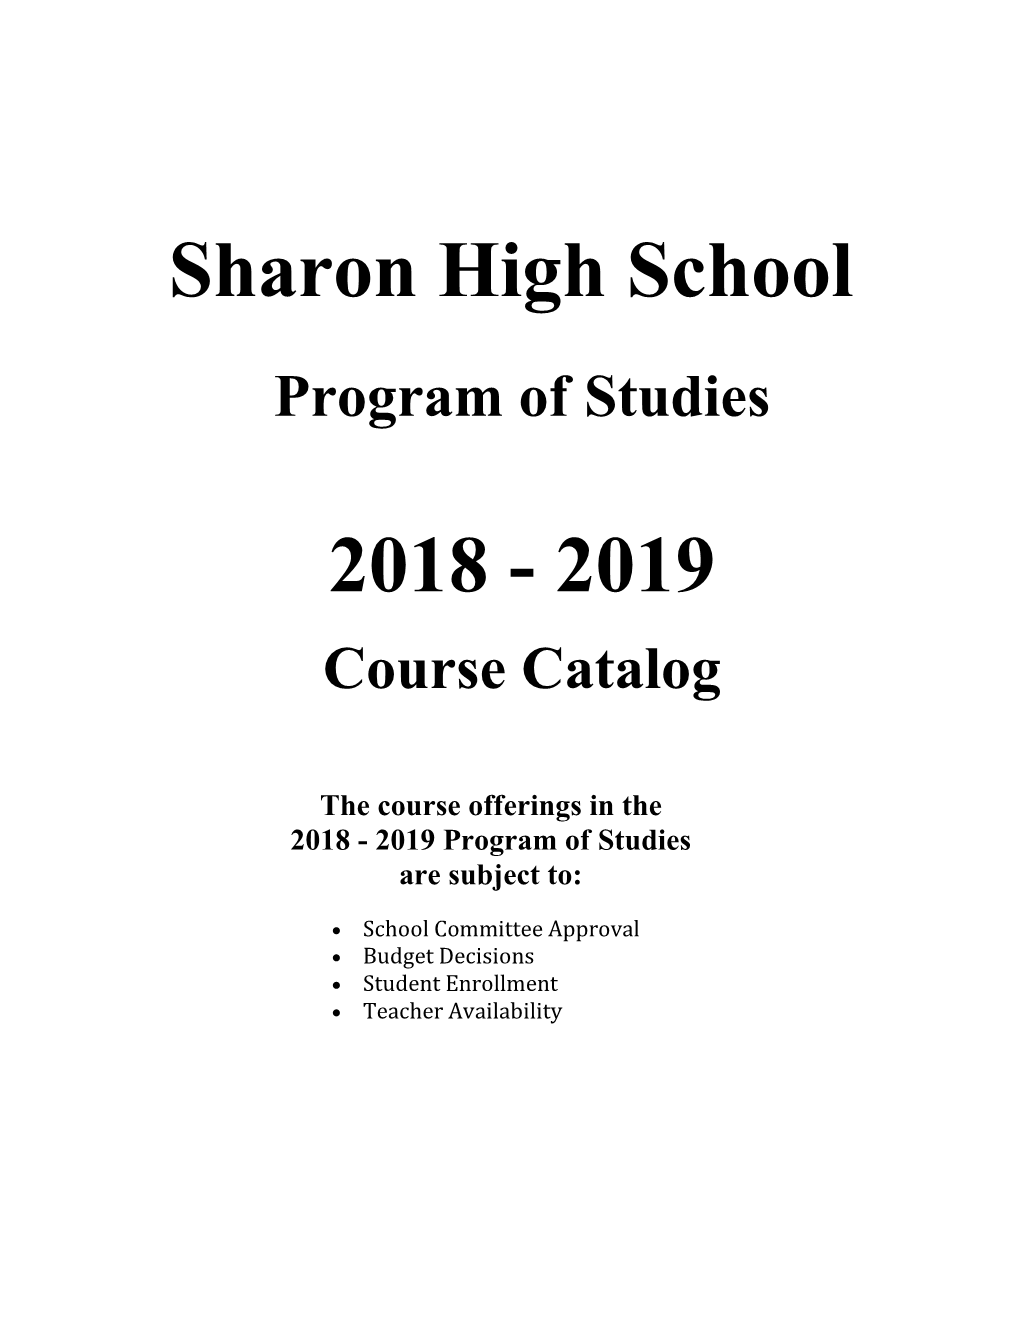 Sharon High School 2018